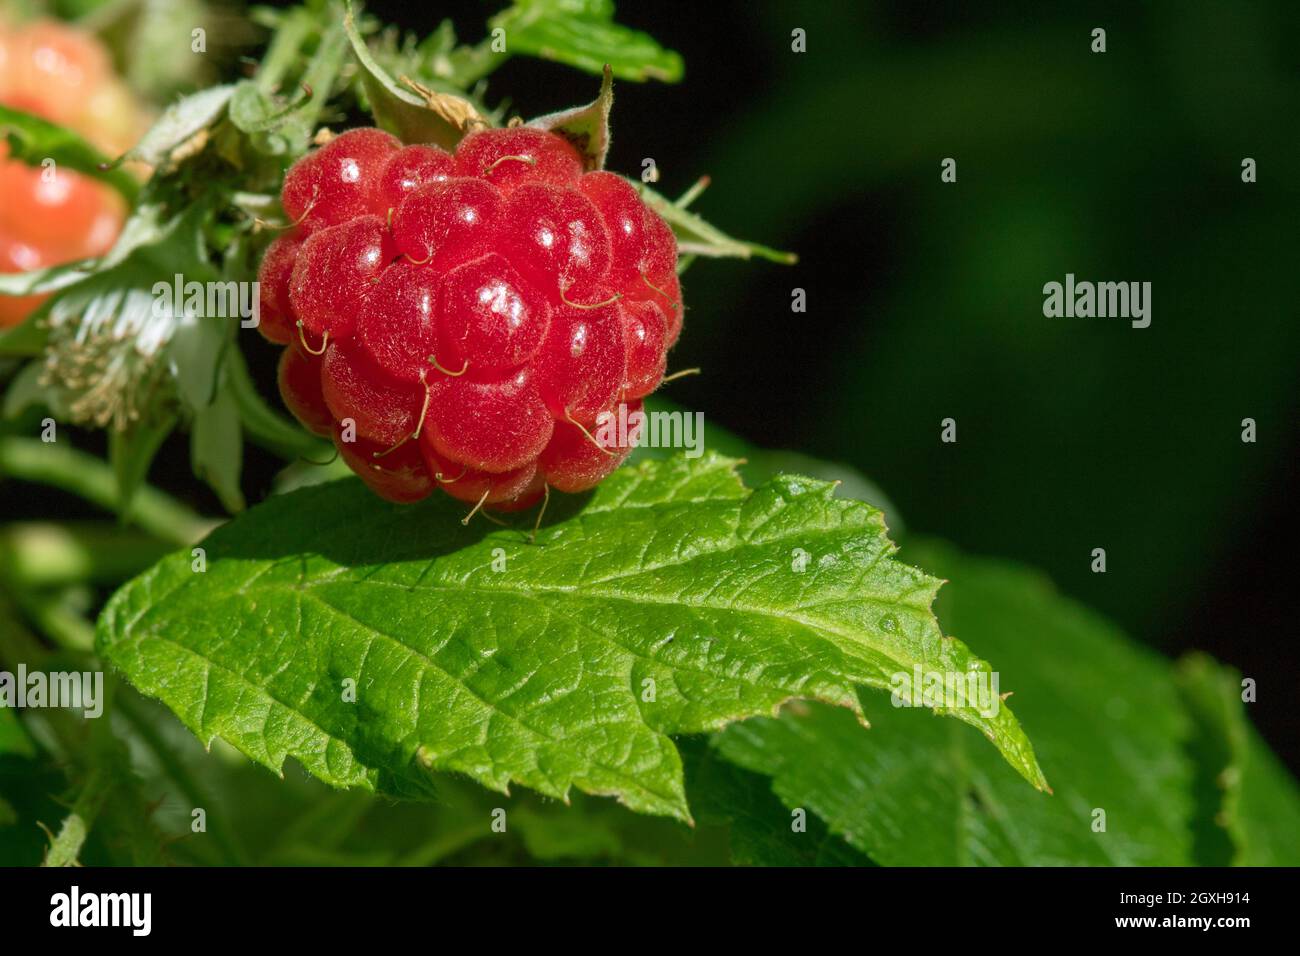 Raspberry Growing On Vine Stock Photo